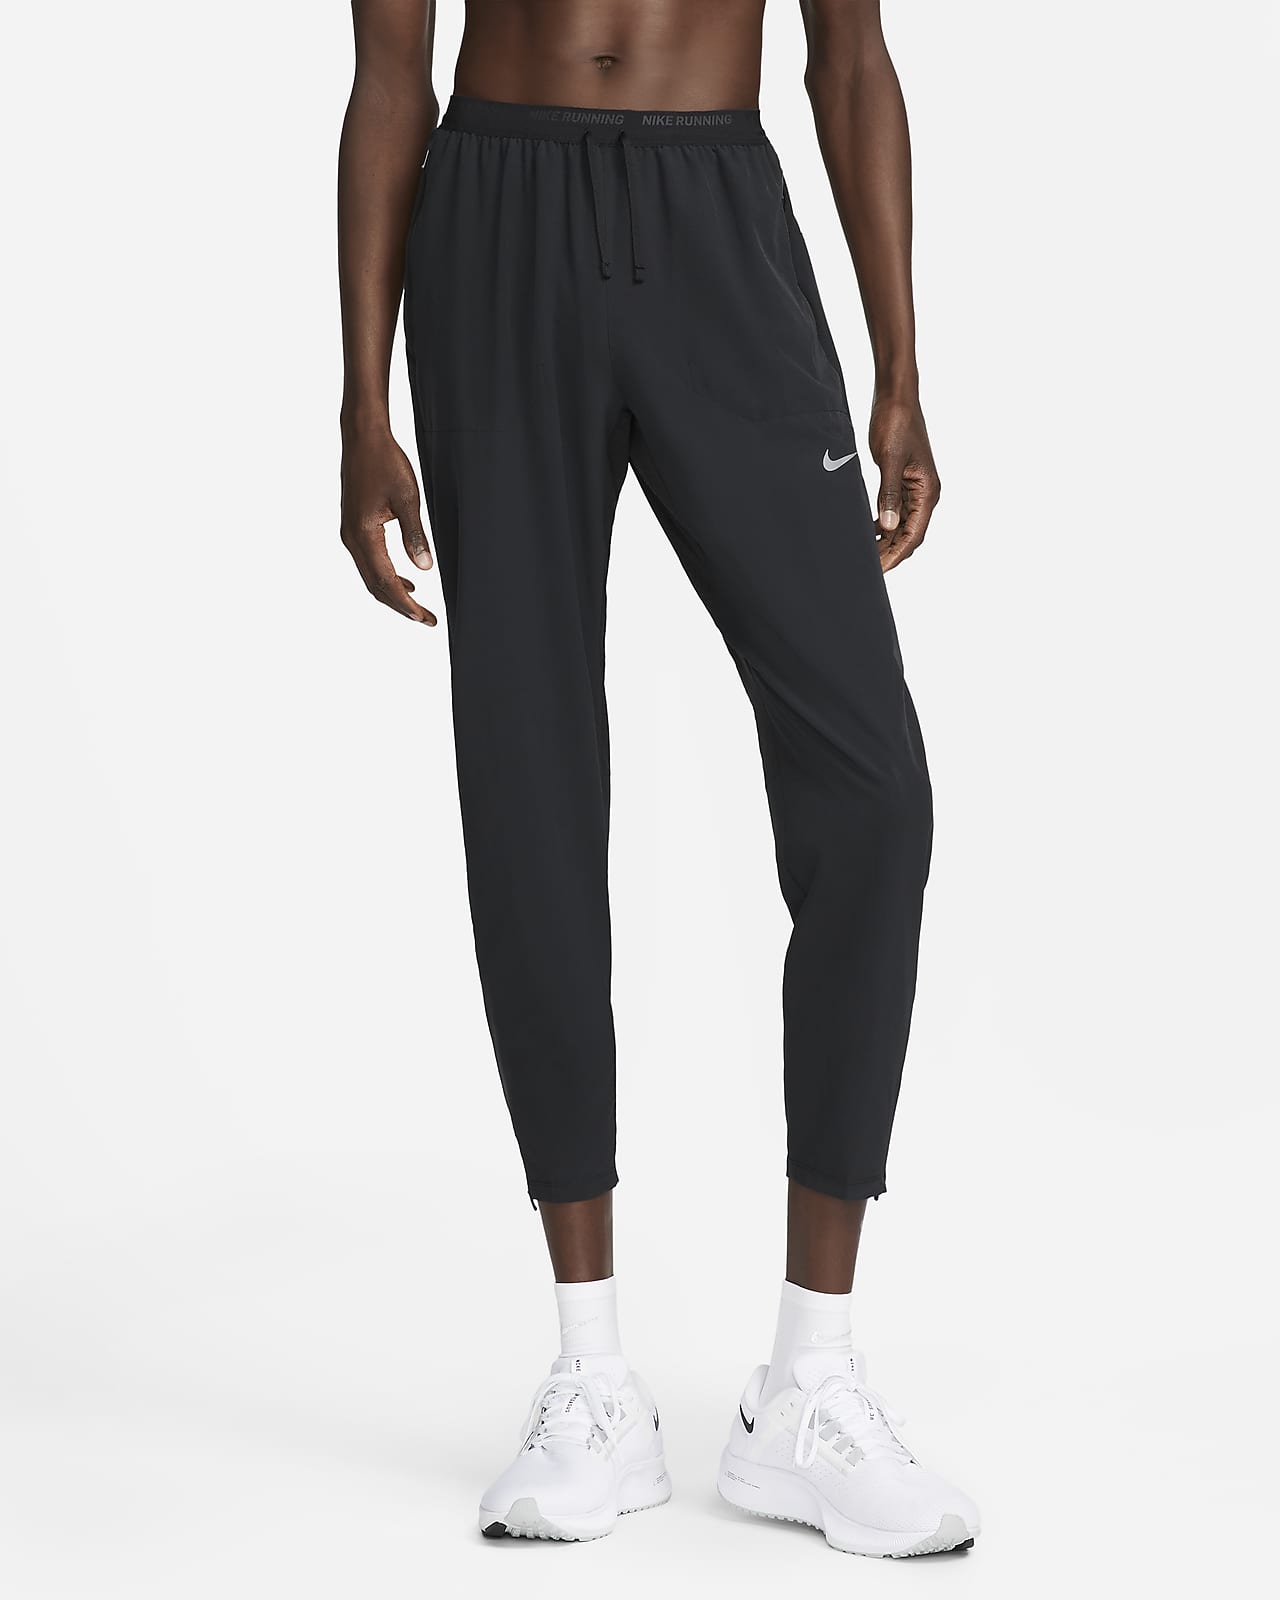 Pantalon de running tissé Dri-FIT Nike Phenom pour homme